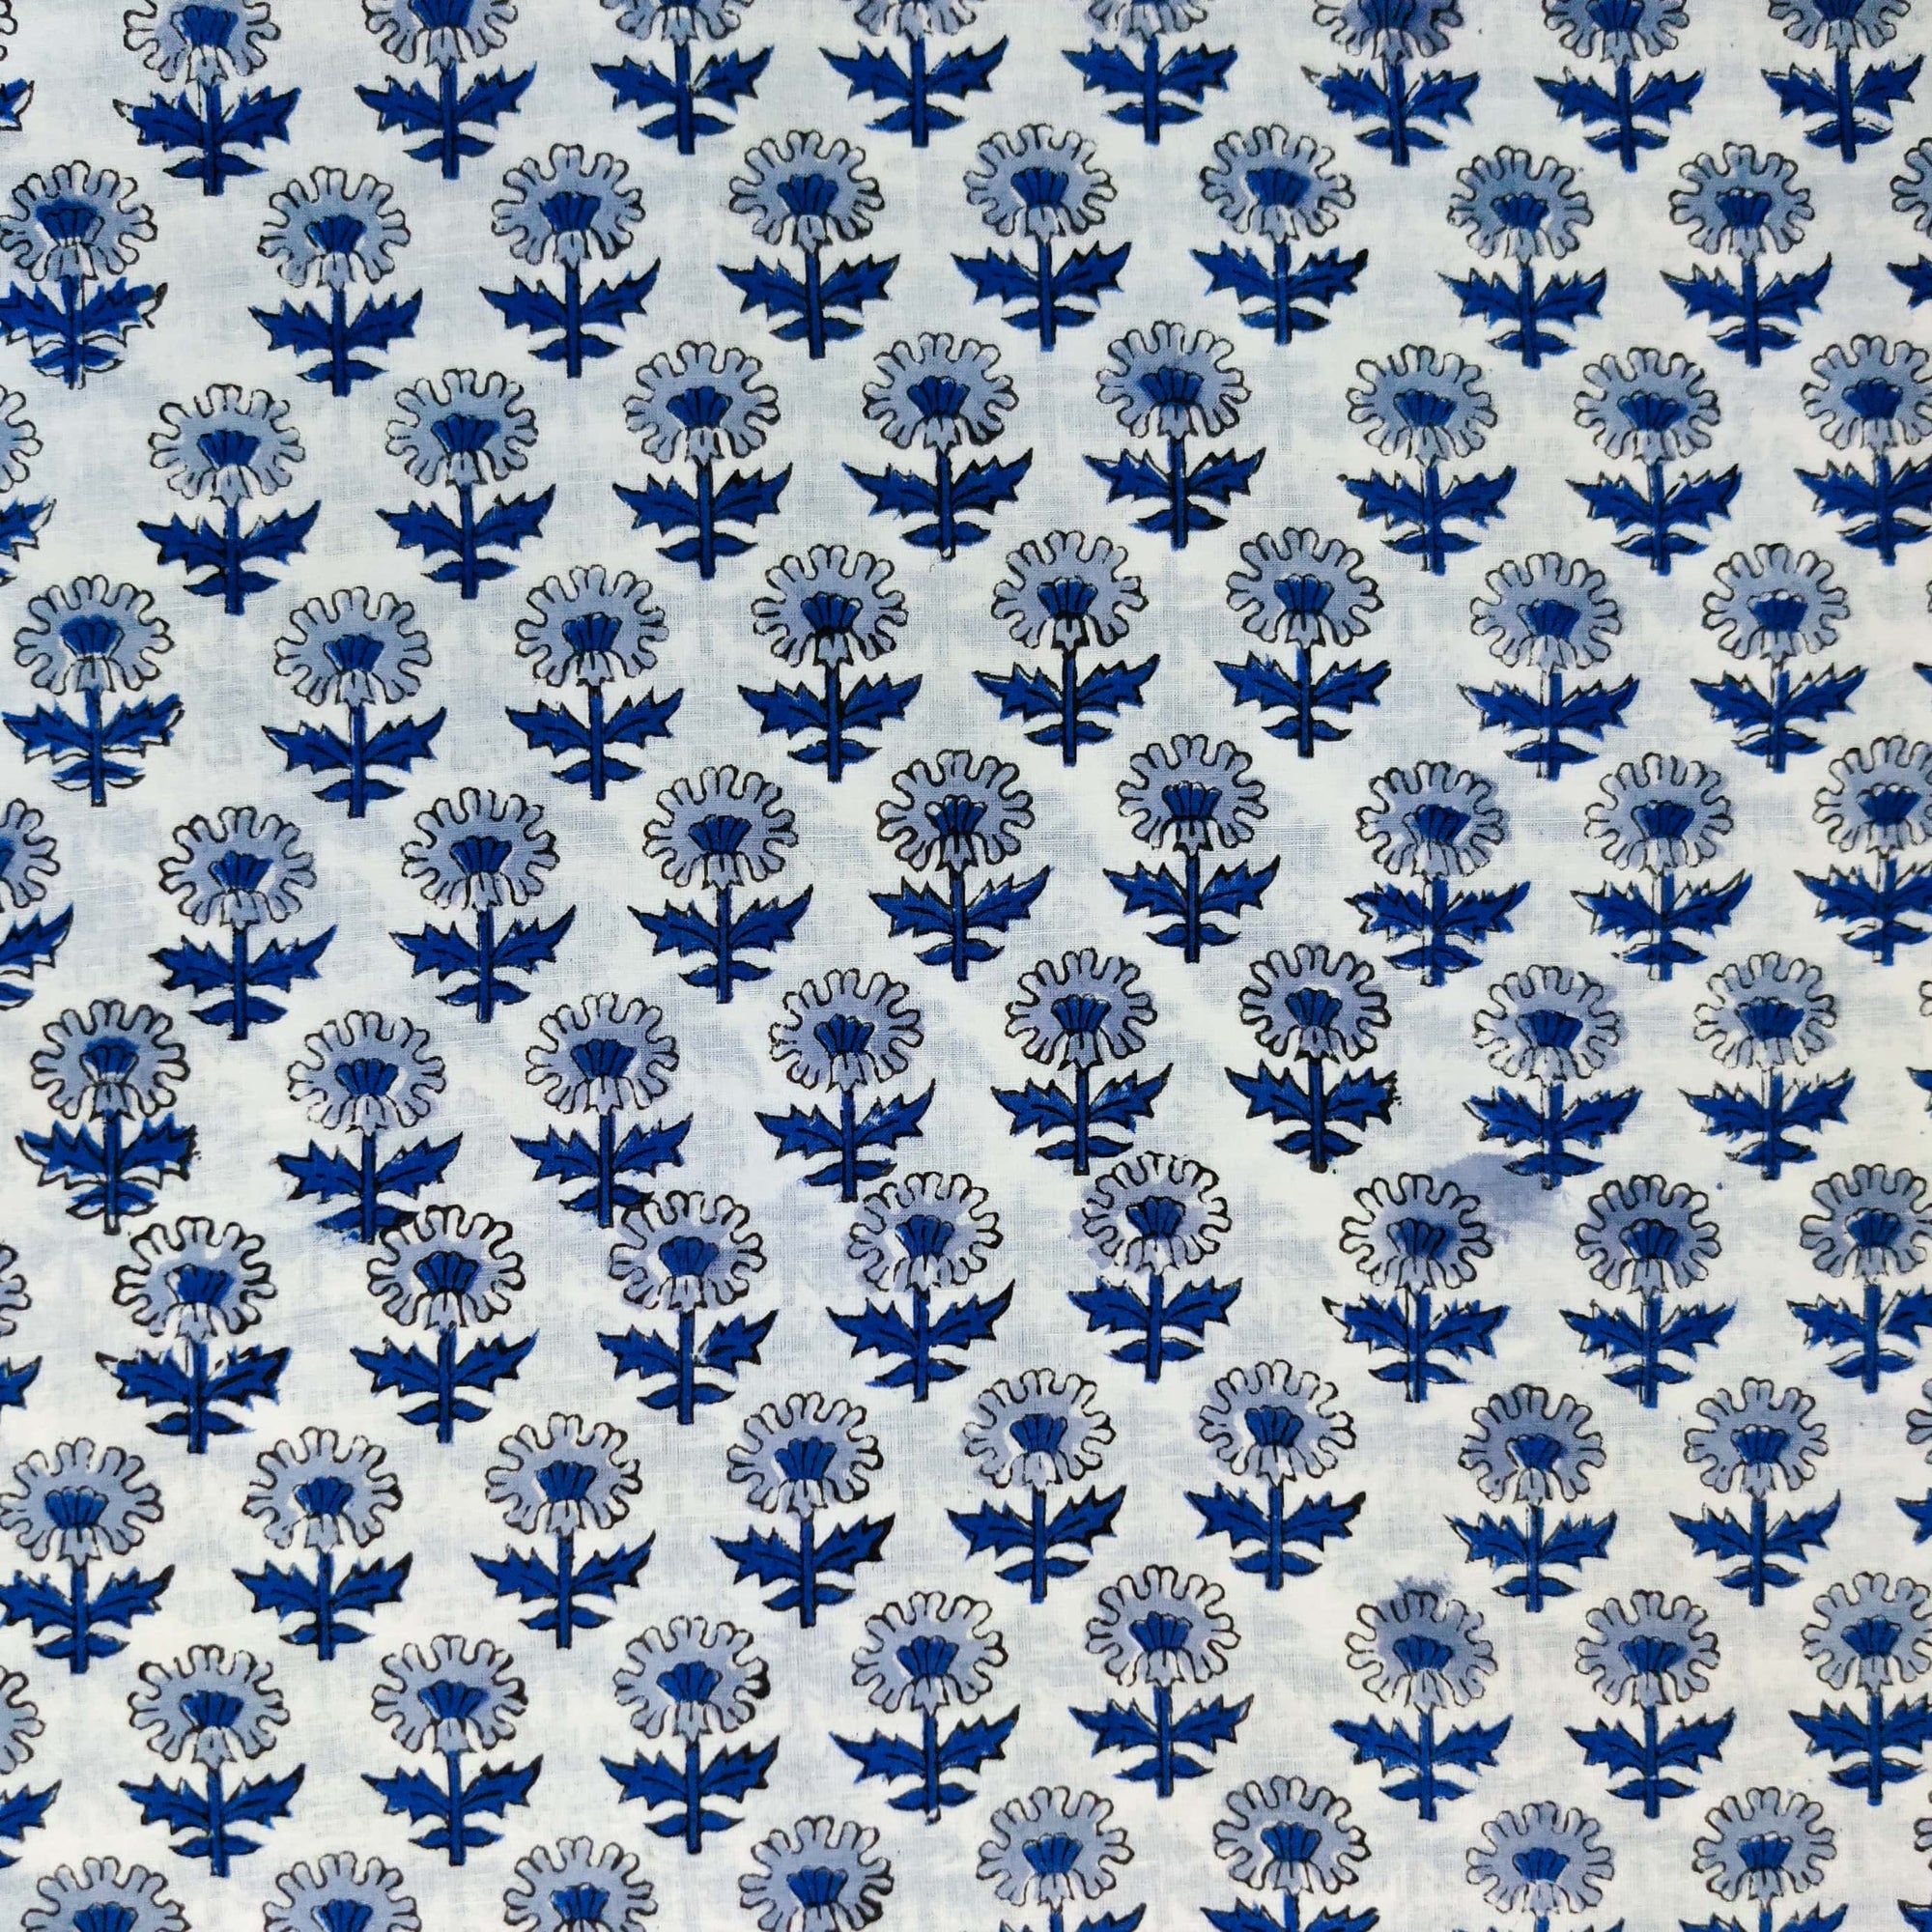 Hand Block Fish Print Fabric Cotton Fabric, Blue at Rs 120/meter in Jaipur